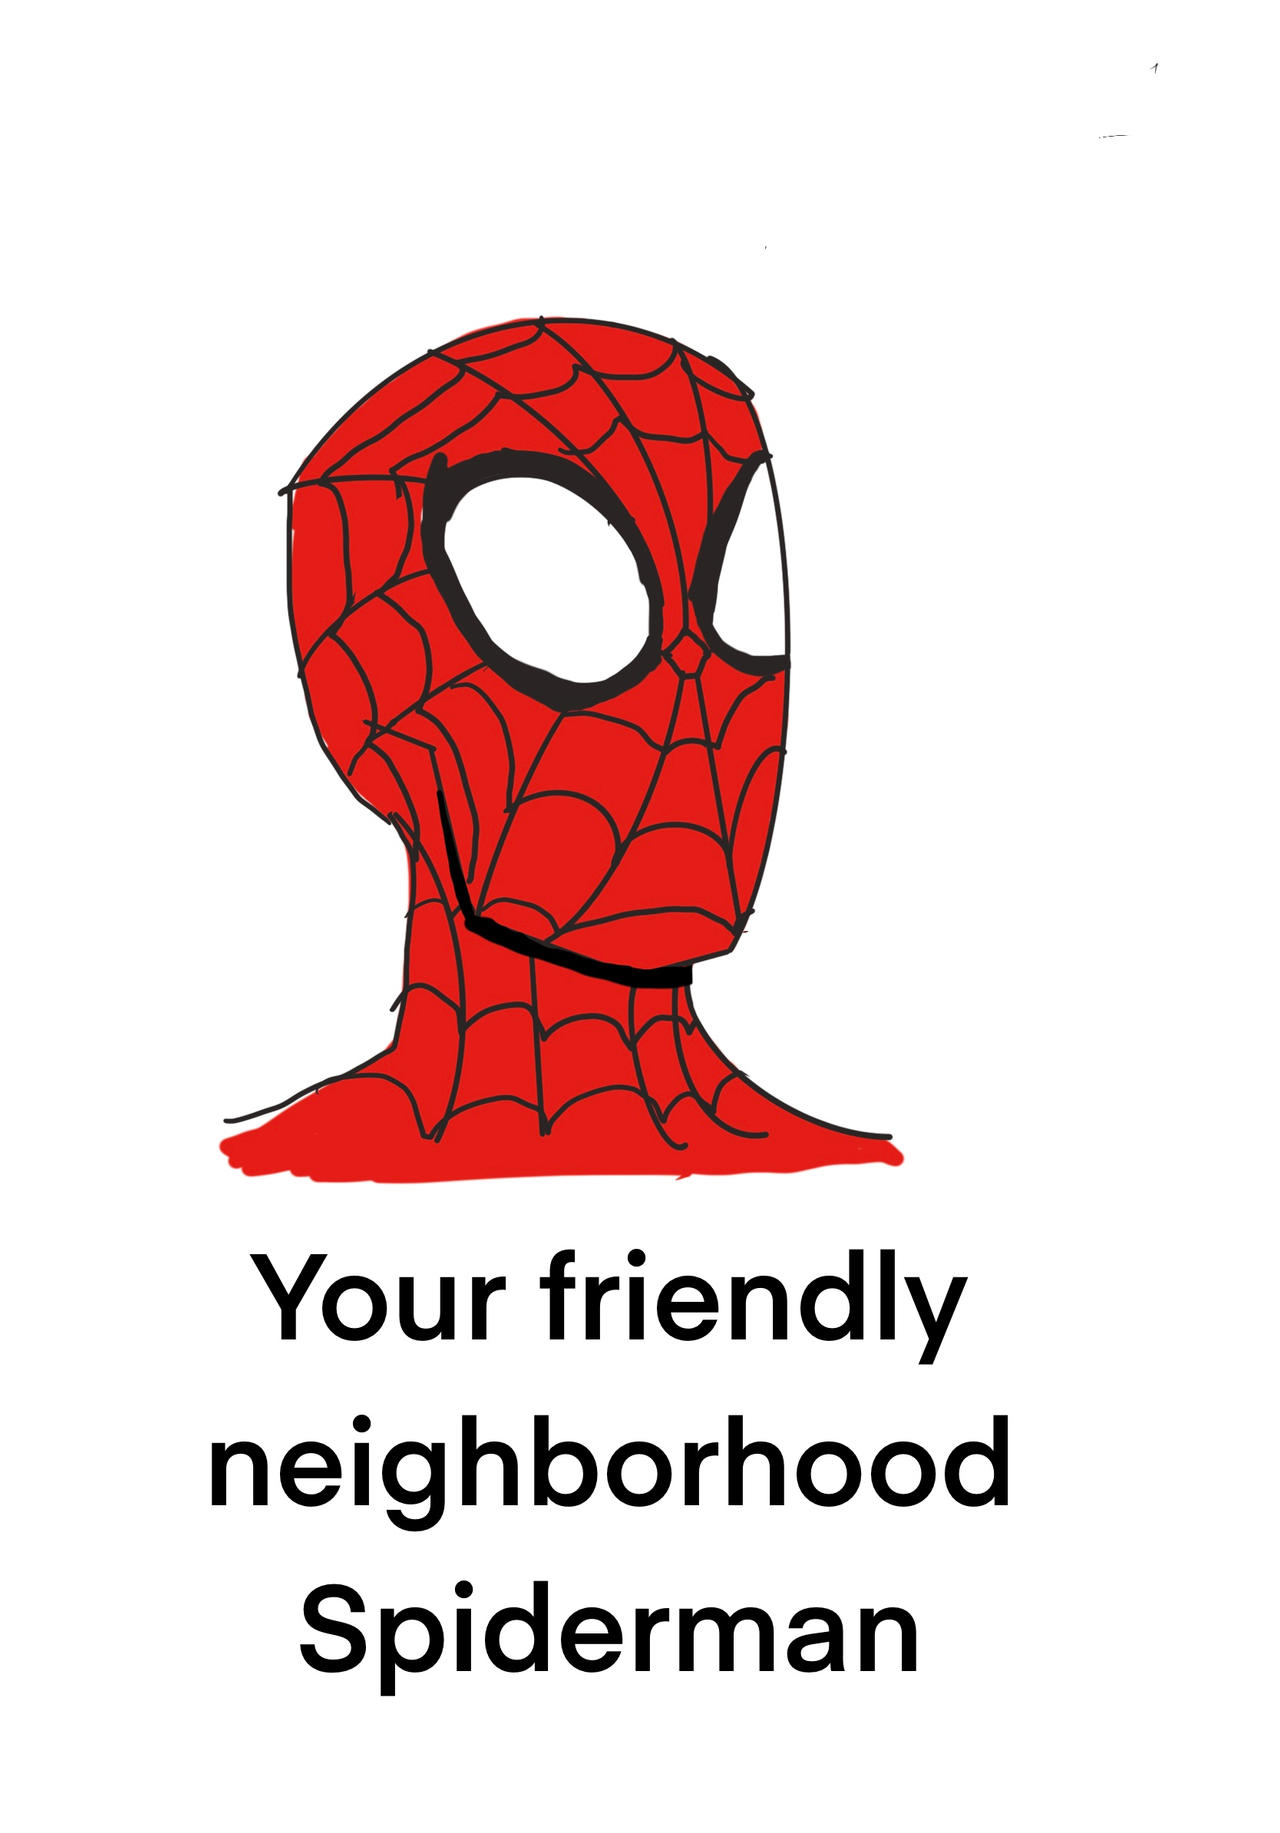 Your friendly neighborhood Spider-Man by HarryBoyXD99 on DeviantArt